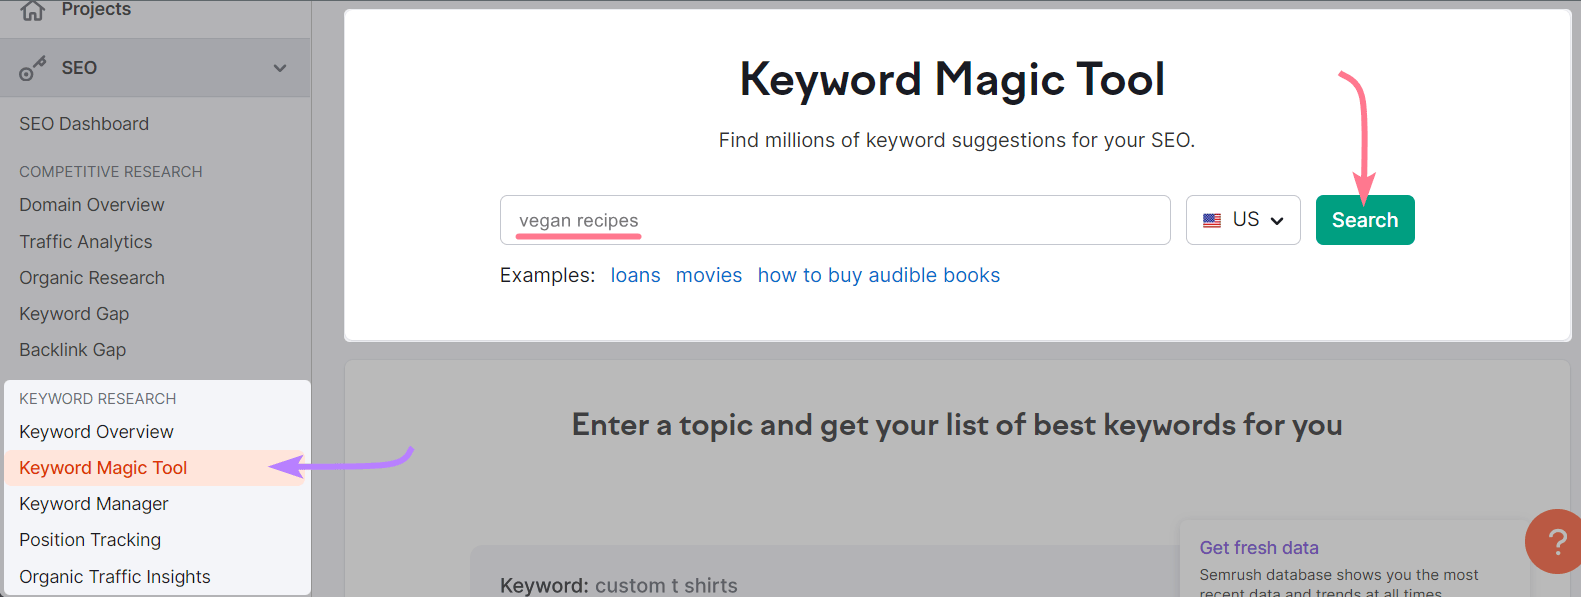 "vegan recipes" entered into the Keyword Magic Tool search bar